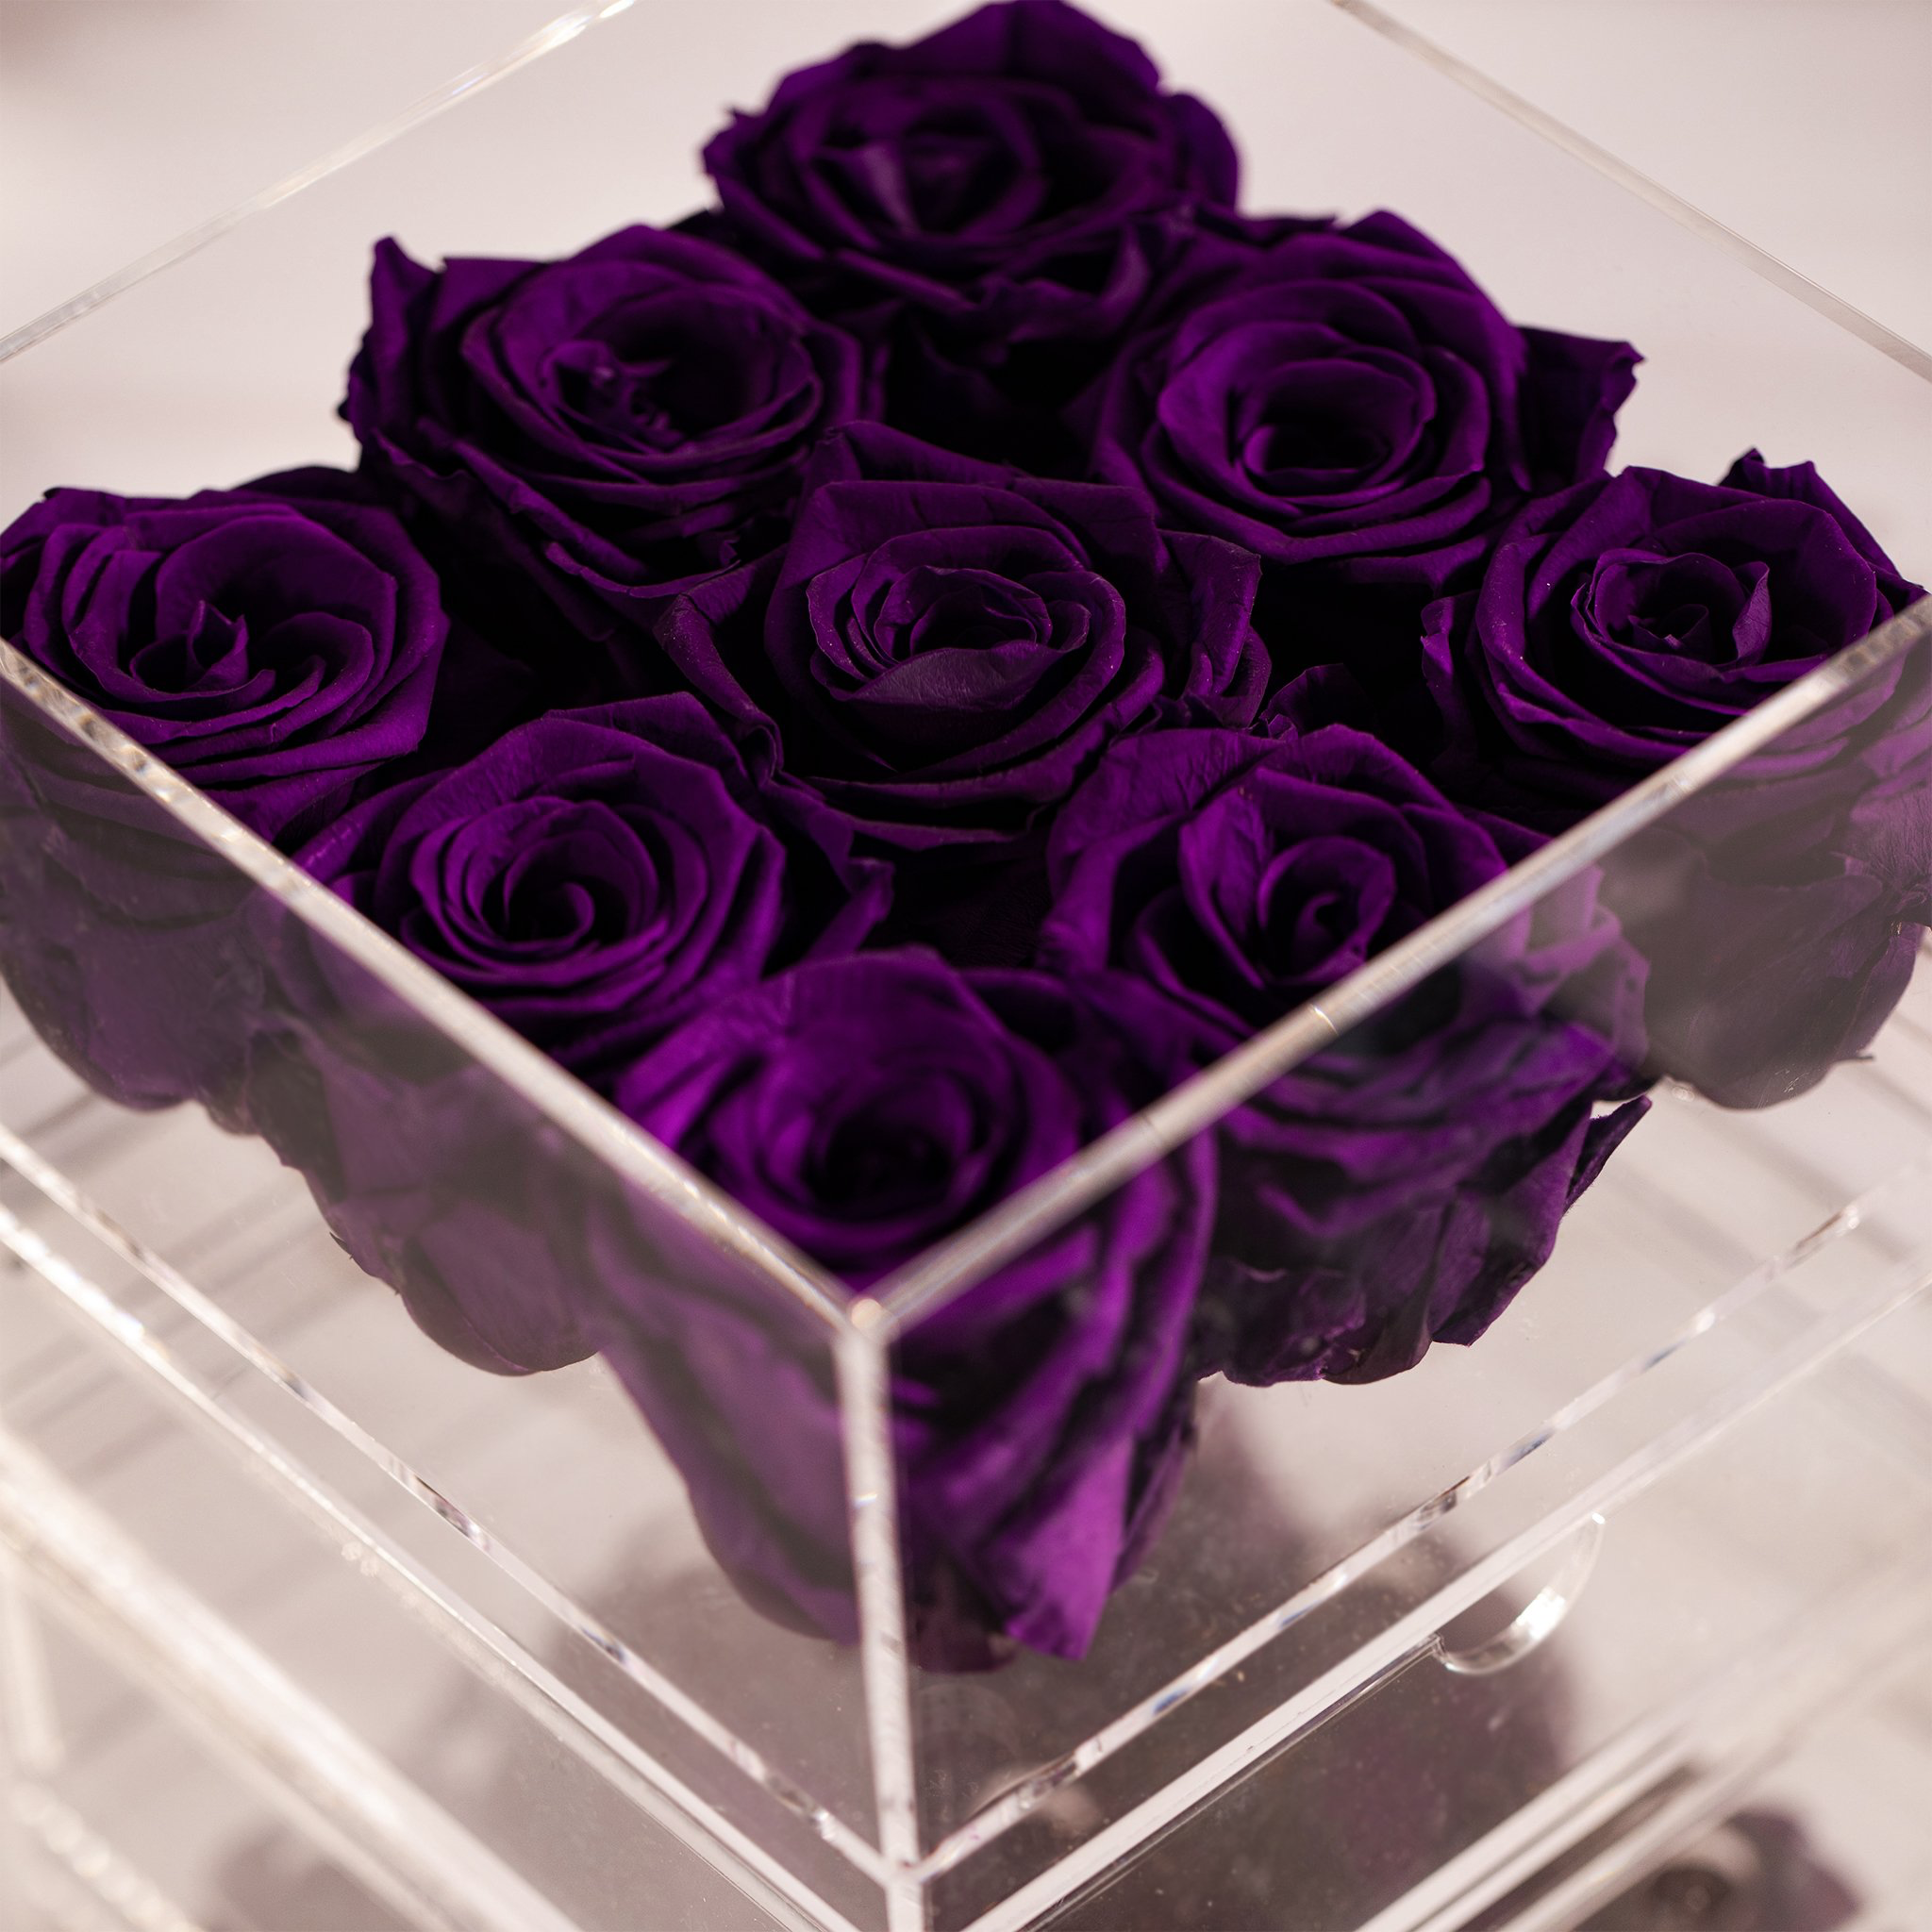 Luxurious dark purple set of nine Roses implying wisdom, magic, and creativity.